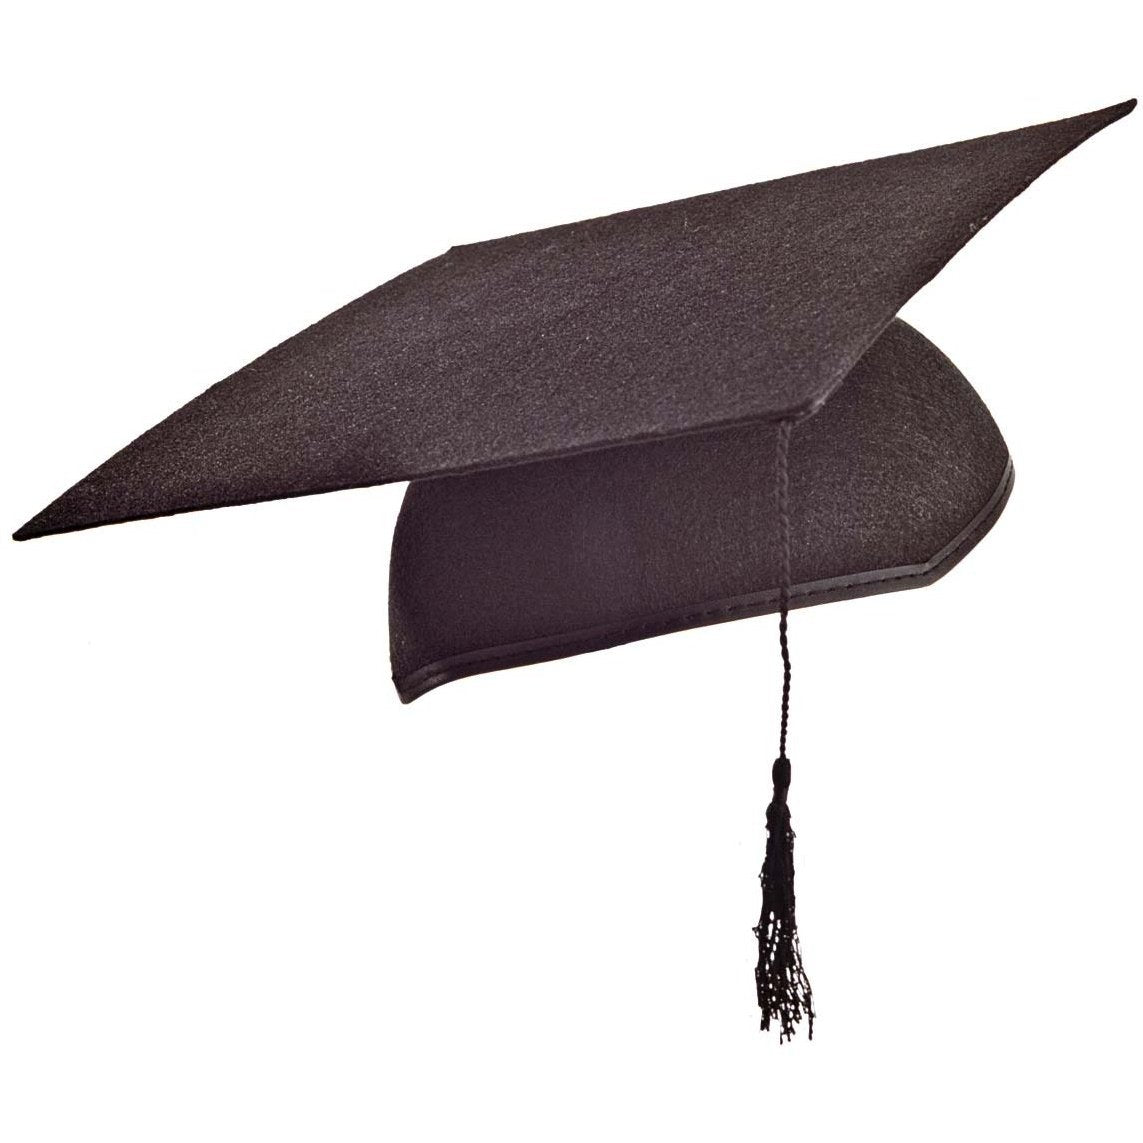 Adult Graduation Cap With Tassel -  Black